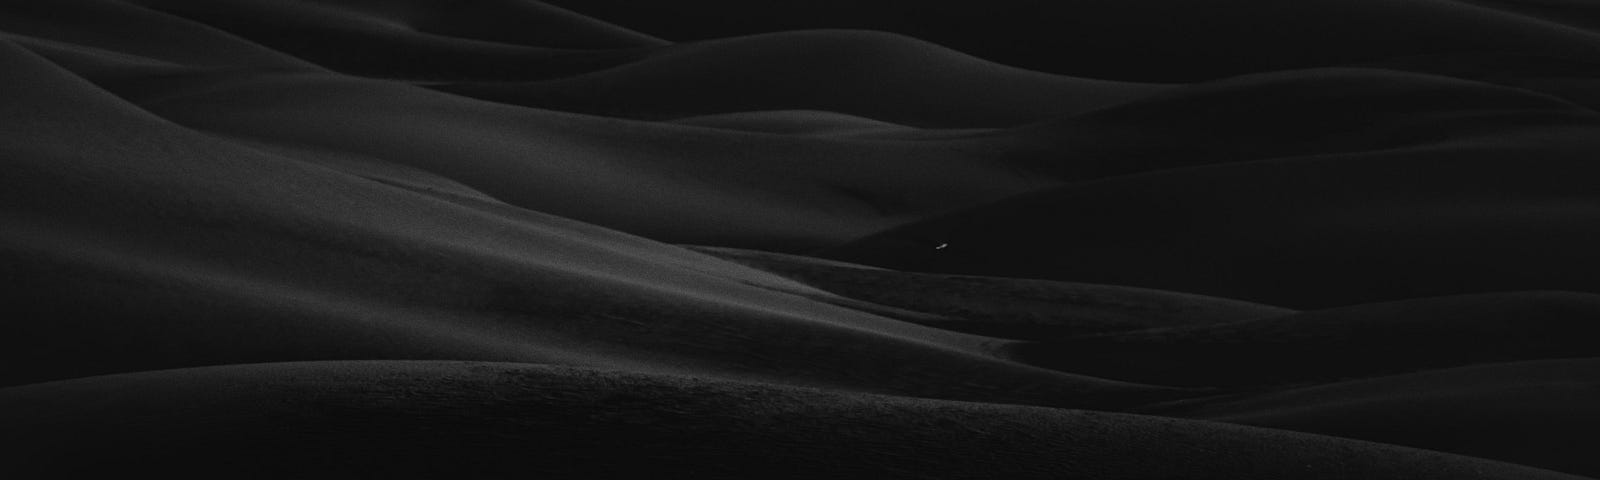 A dark desert. A strange place by Joy Nibbs